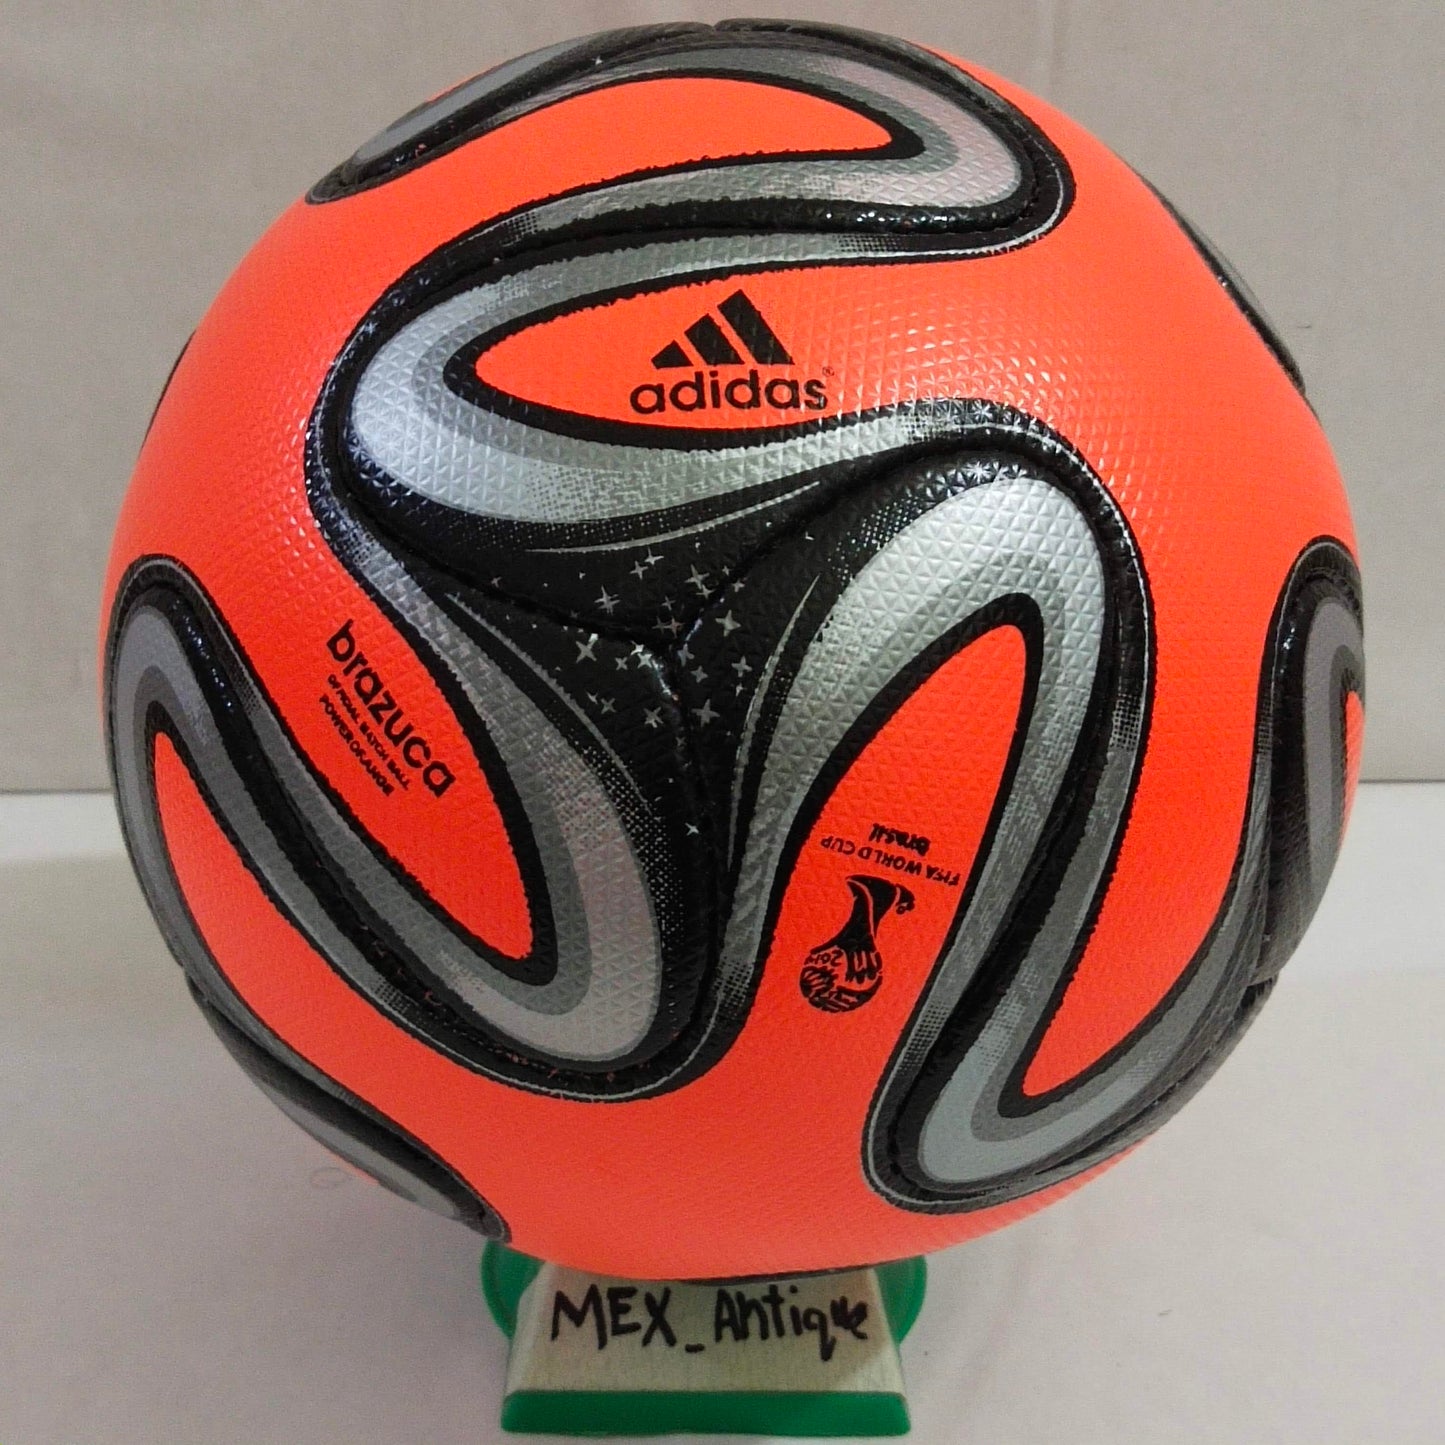 Adidas Brazuca | FIFA World Cup 2014 l OMB Winter Ball | Power Orange | SIZE 5 01